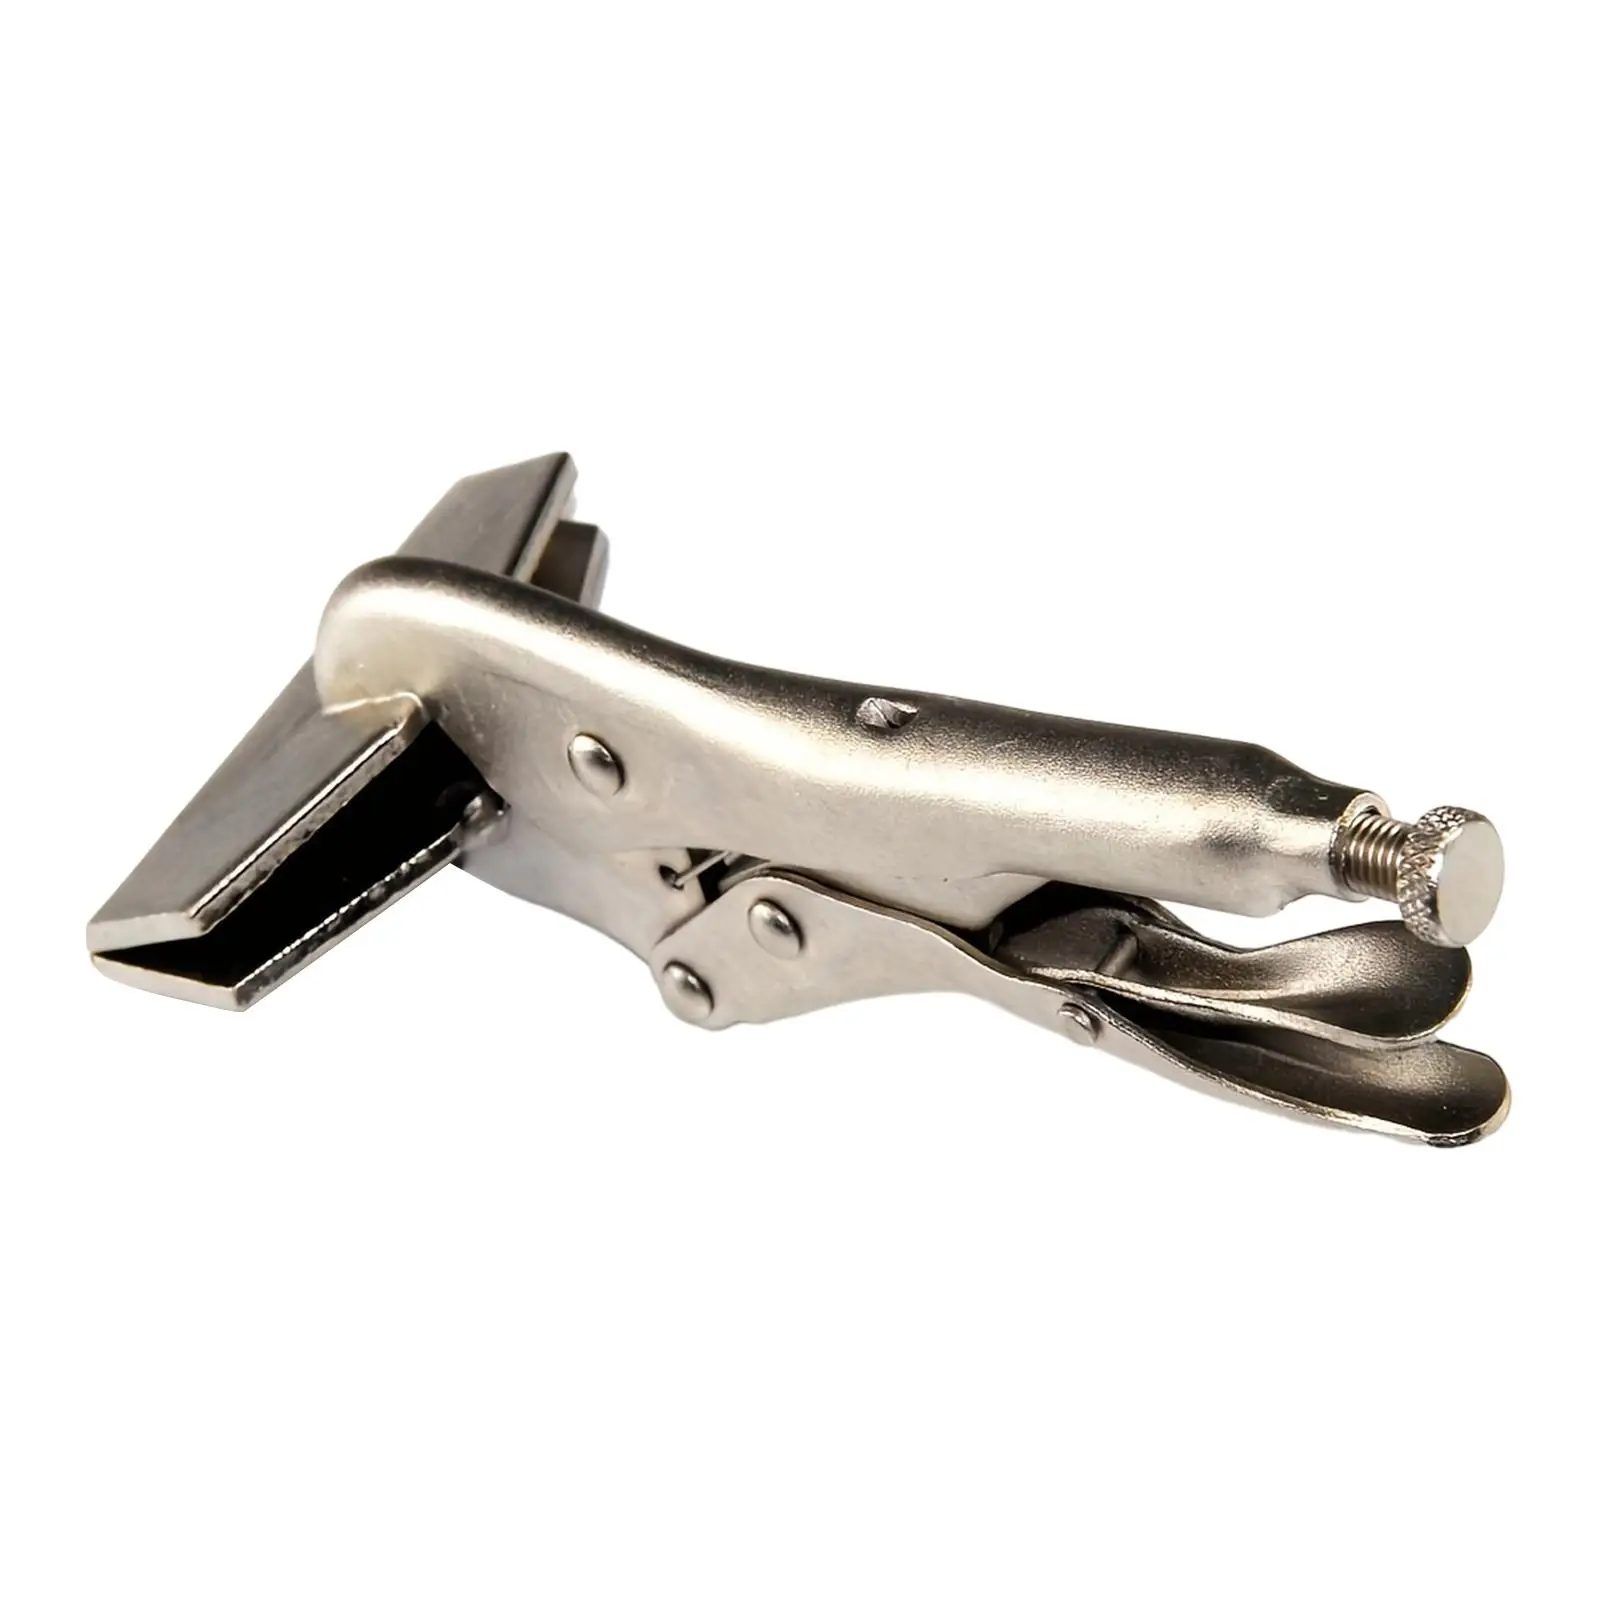 Locking Sheet Metal Clamp Multifunctional Sturdy Heavy Duty Adjustable Opening Professional Sheet Metal Tool Hand Seamers